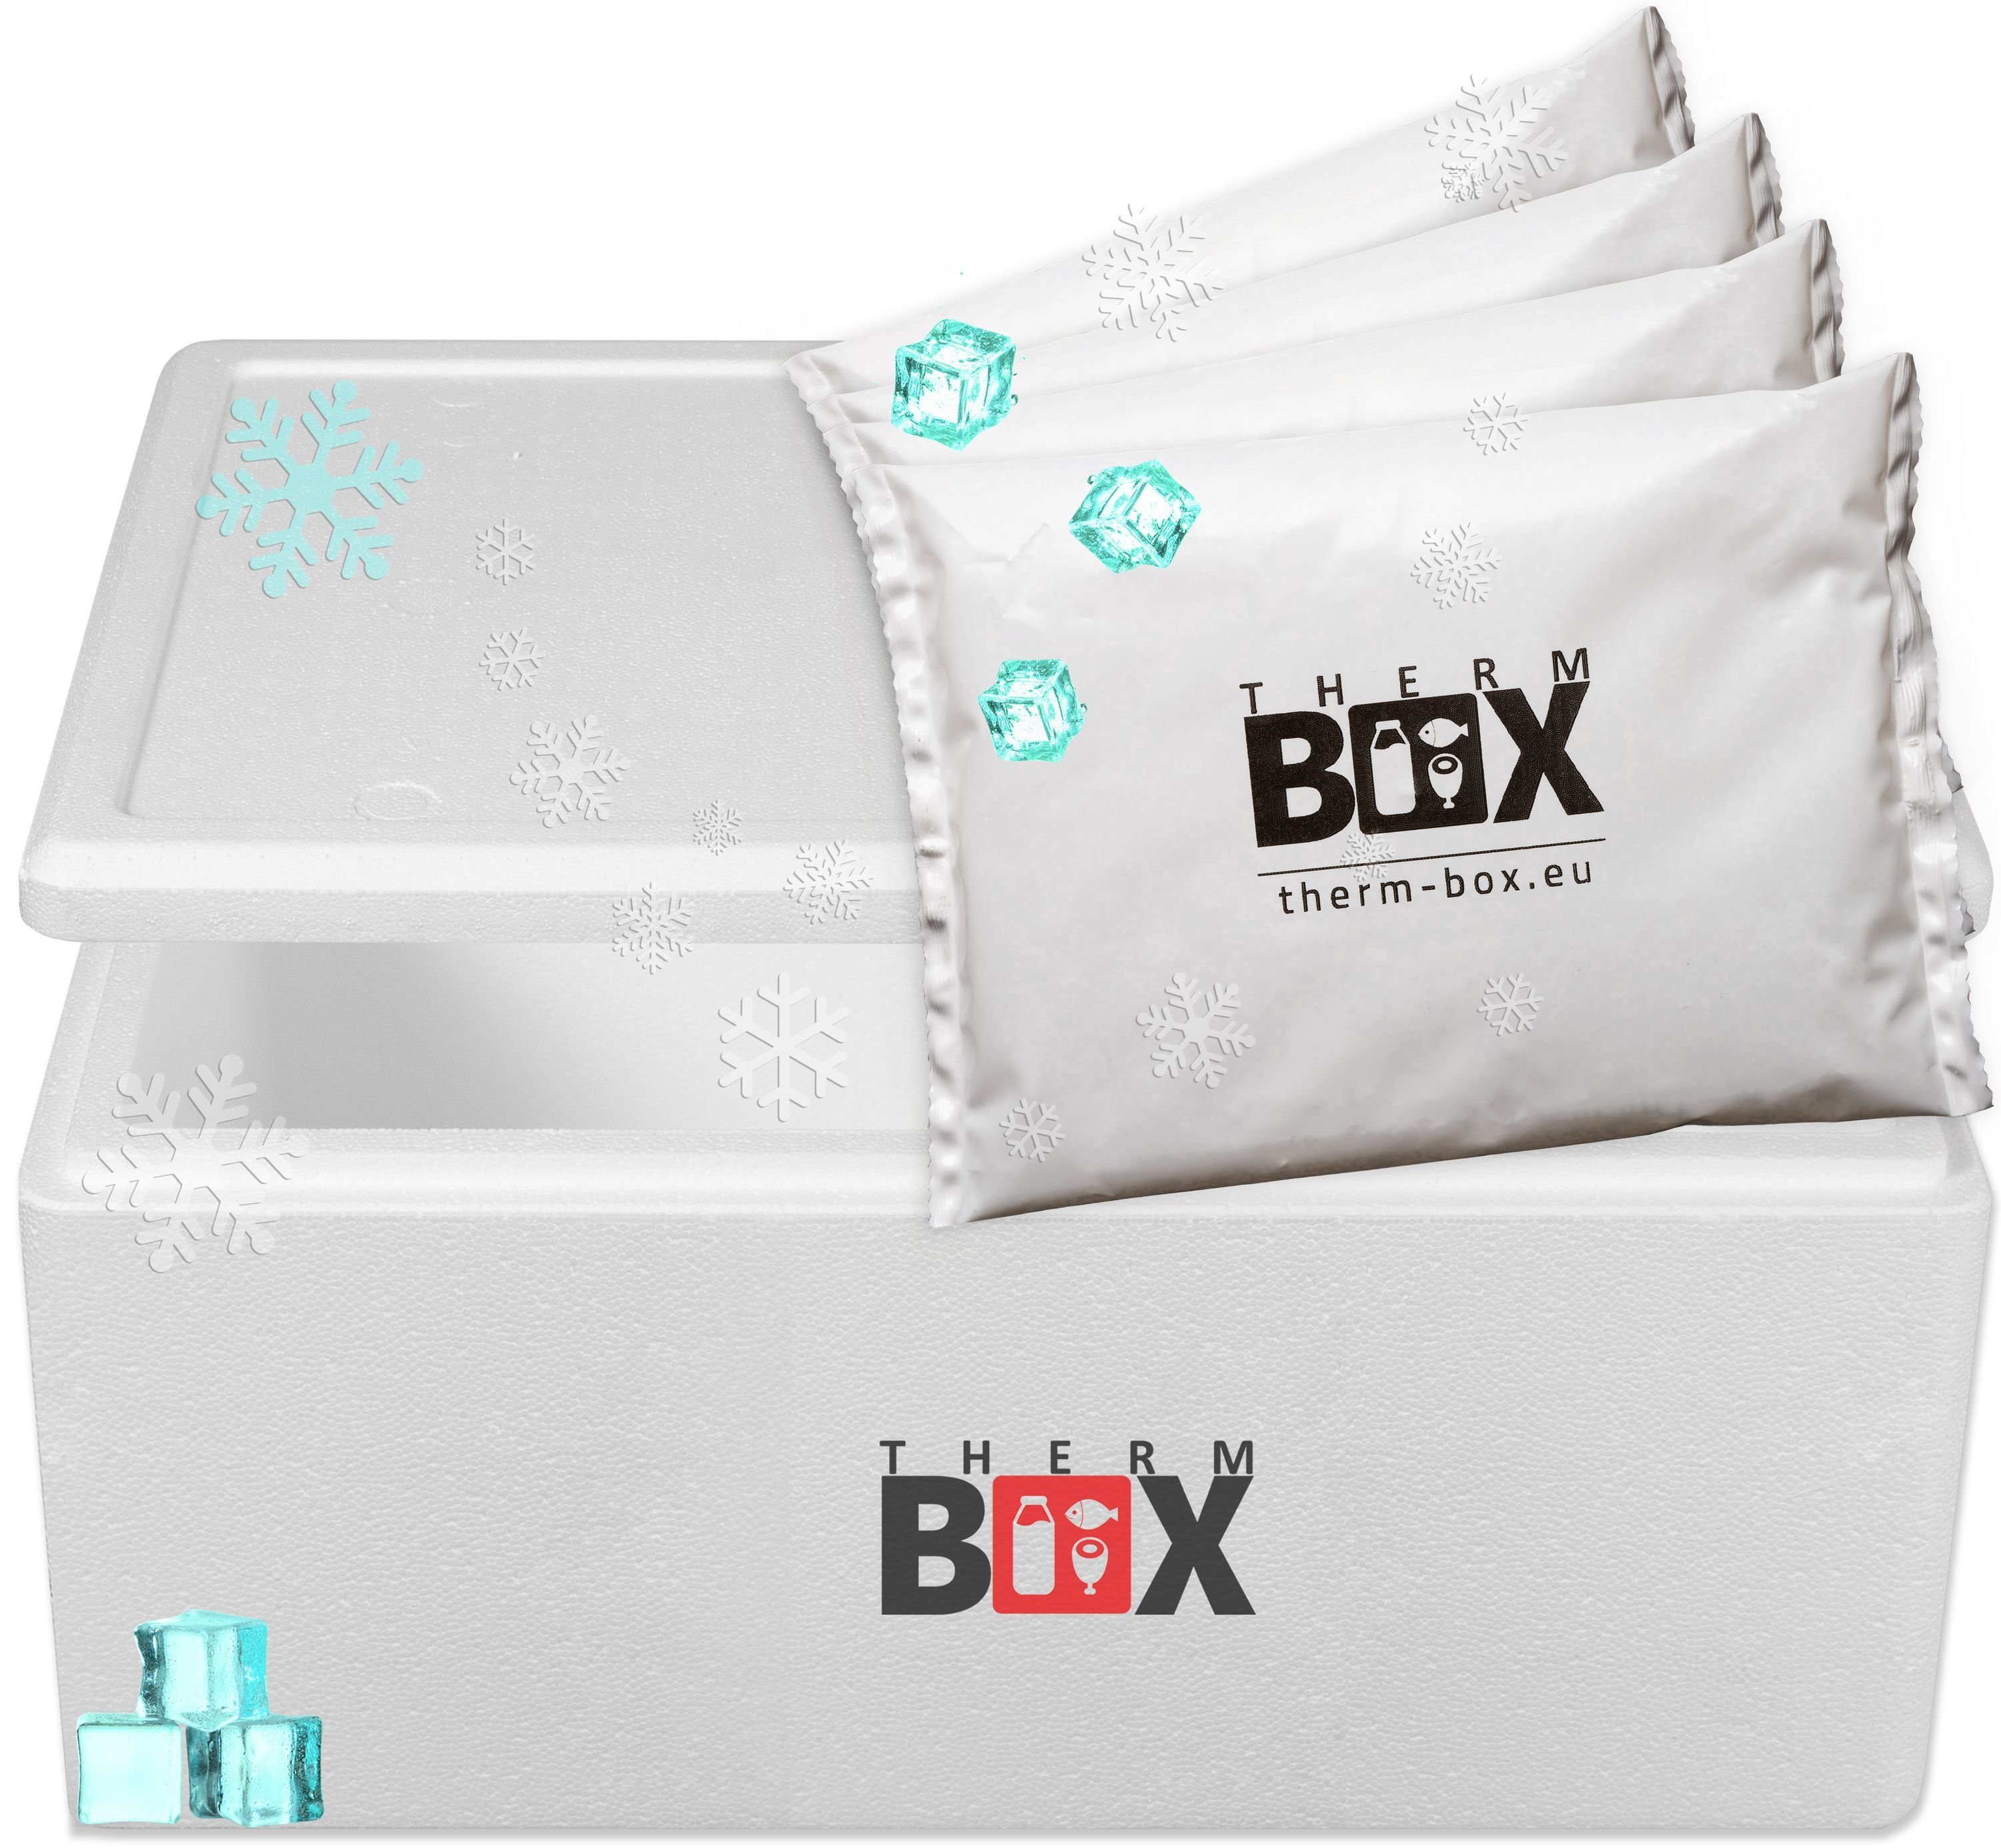 THERM-BOX Thermobehälter Styroporbox mit Thermbox mit 38L Transportbox Styropor-Verdichtet, Kühlbox Kühlkissen, 4 Kühlakku (0-tlg., Wiederverwendbar 38W Kühlkissen), Innen:53x33x21cm